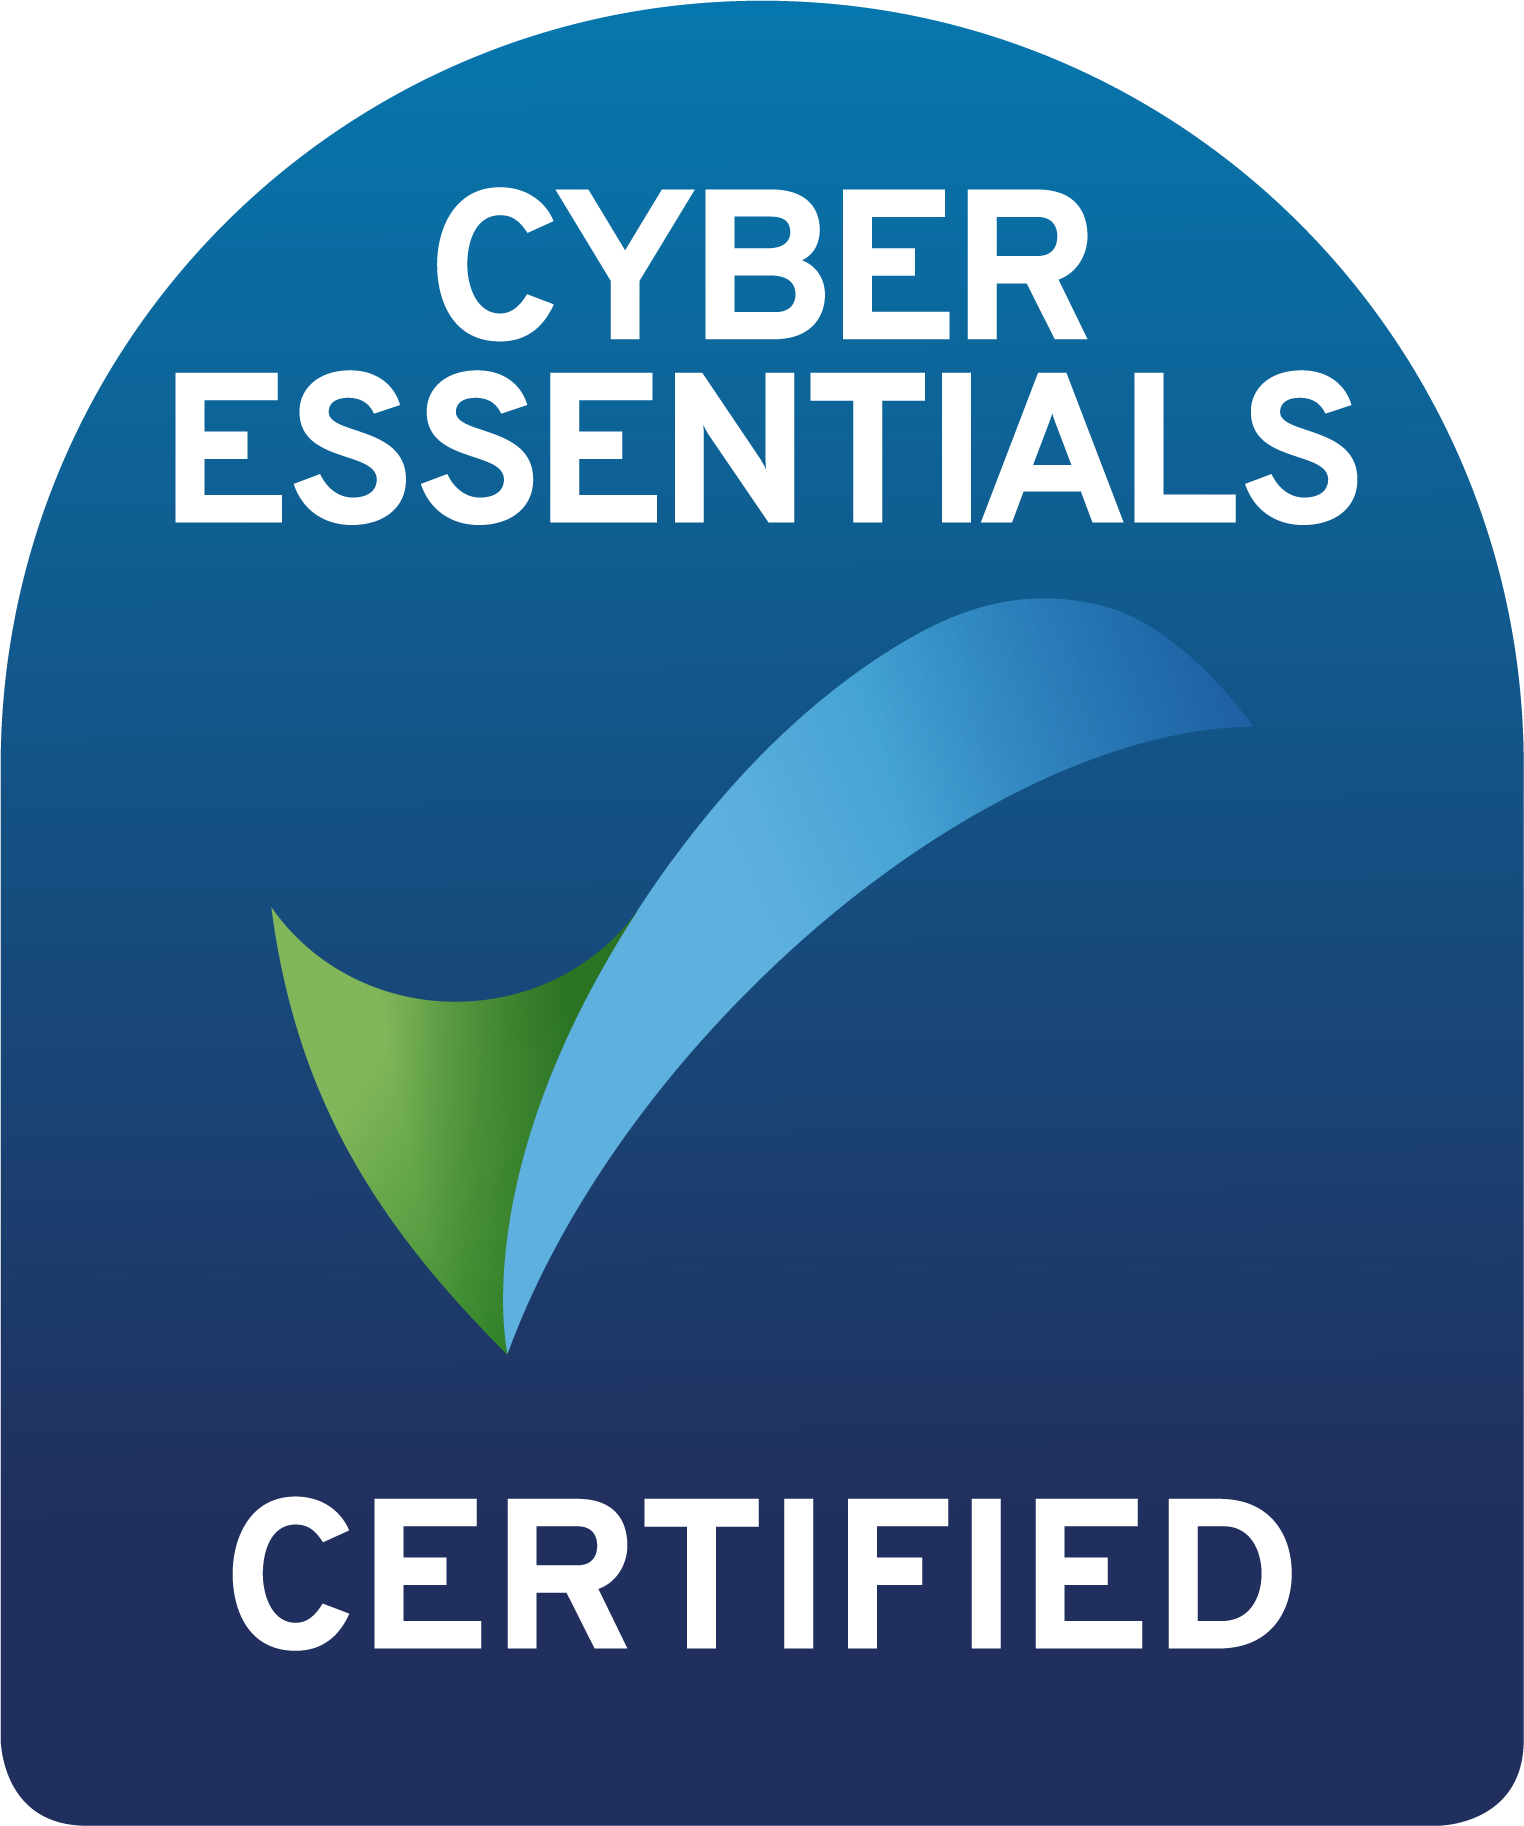 cyberessentials_certification mark_colour 2021